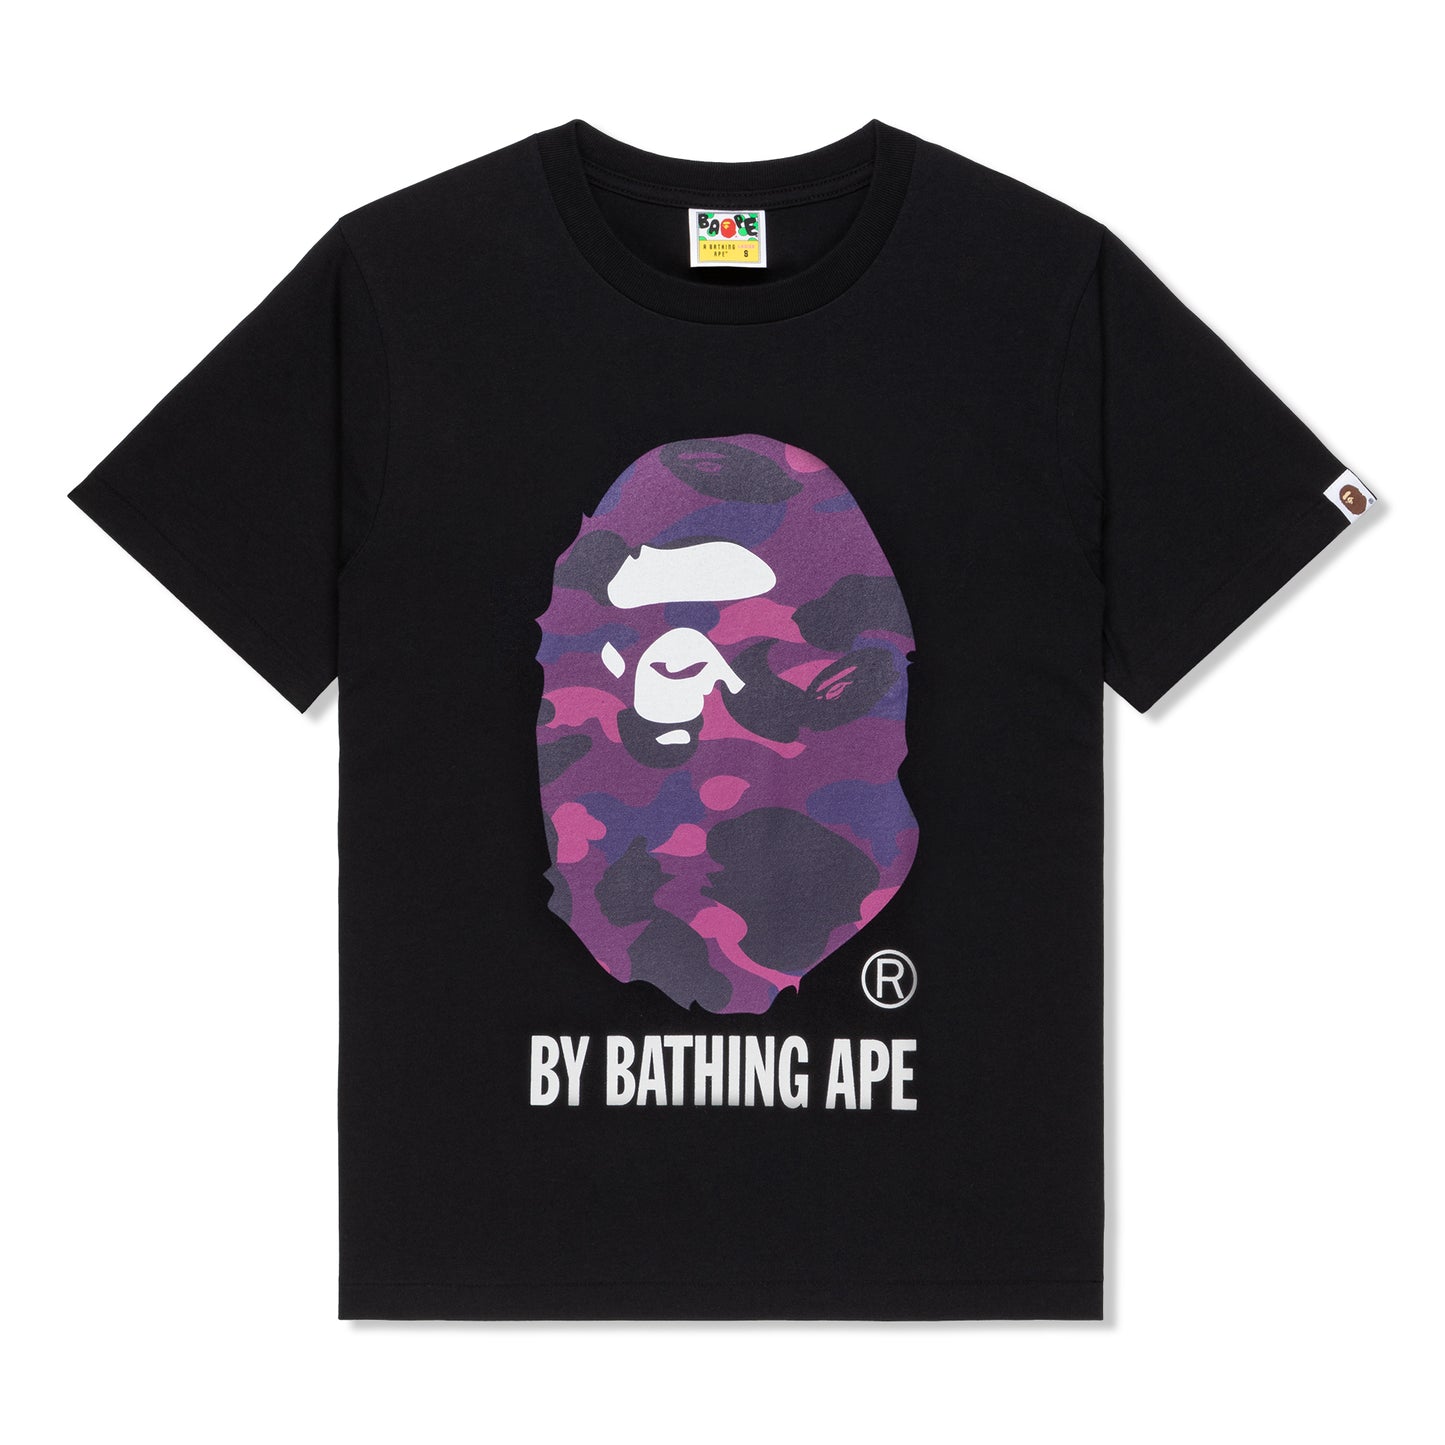 A Bathing Ape Womens Color Camo by Bathing Ape Tee (Black/Purple)